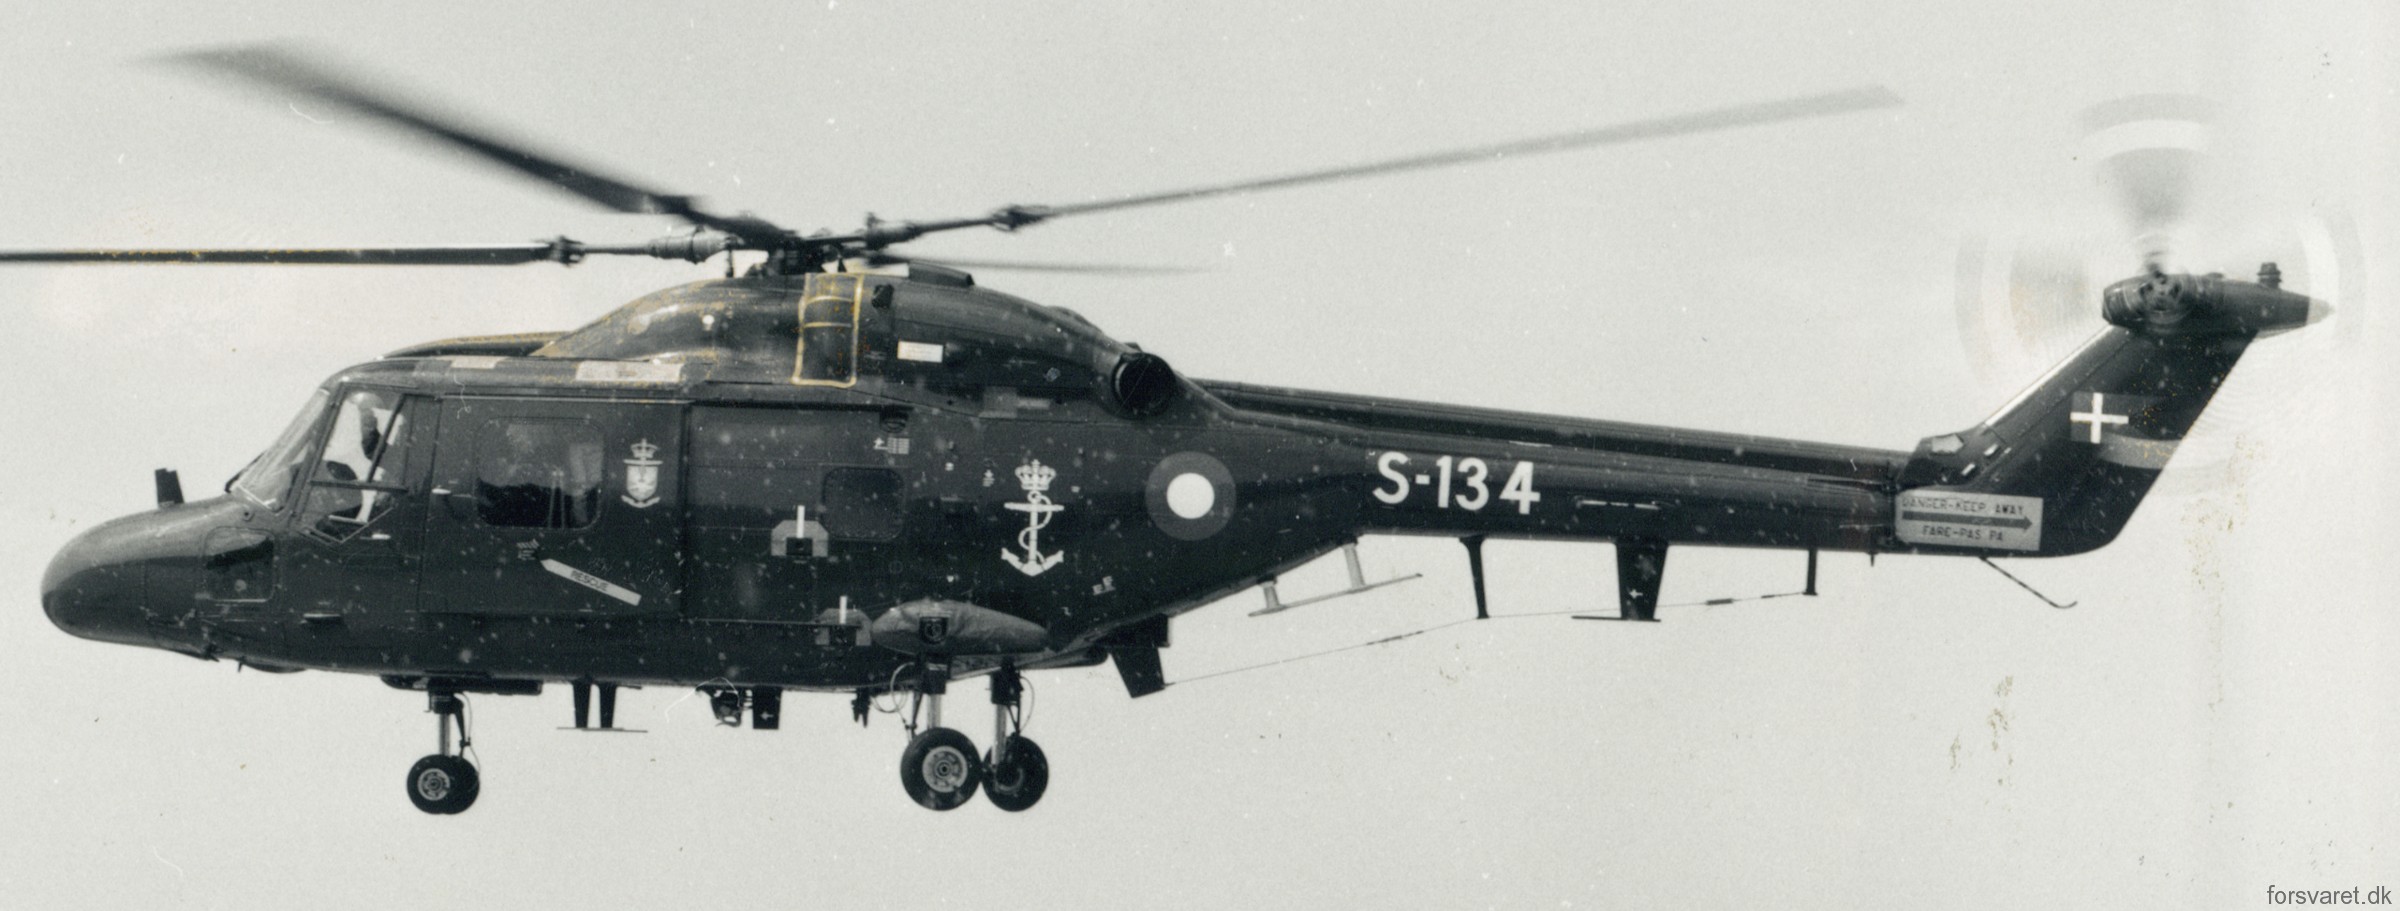 lynx mk.80 mk.90b helicopter westland royal danish navy air force kongelige danske marine flyvevabnet s-134 13